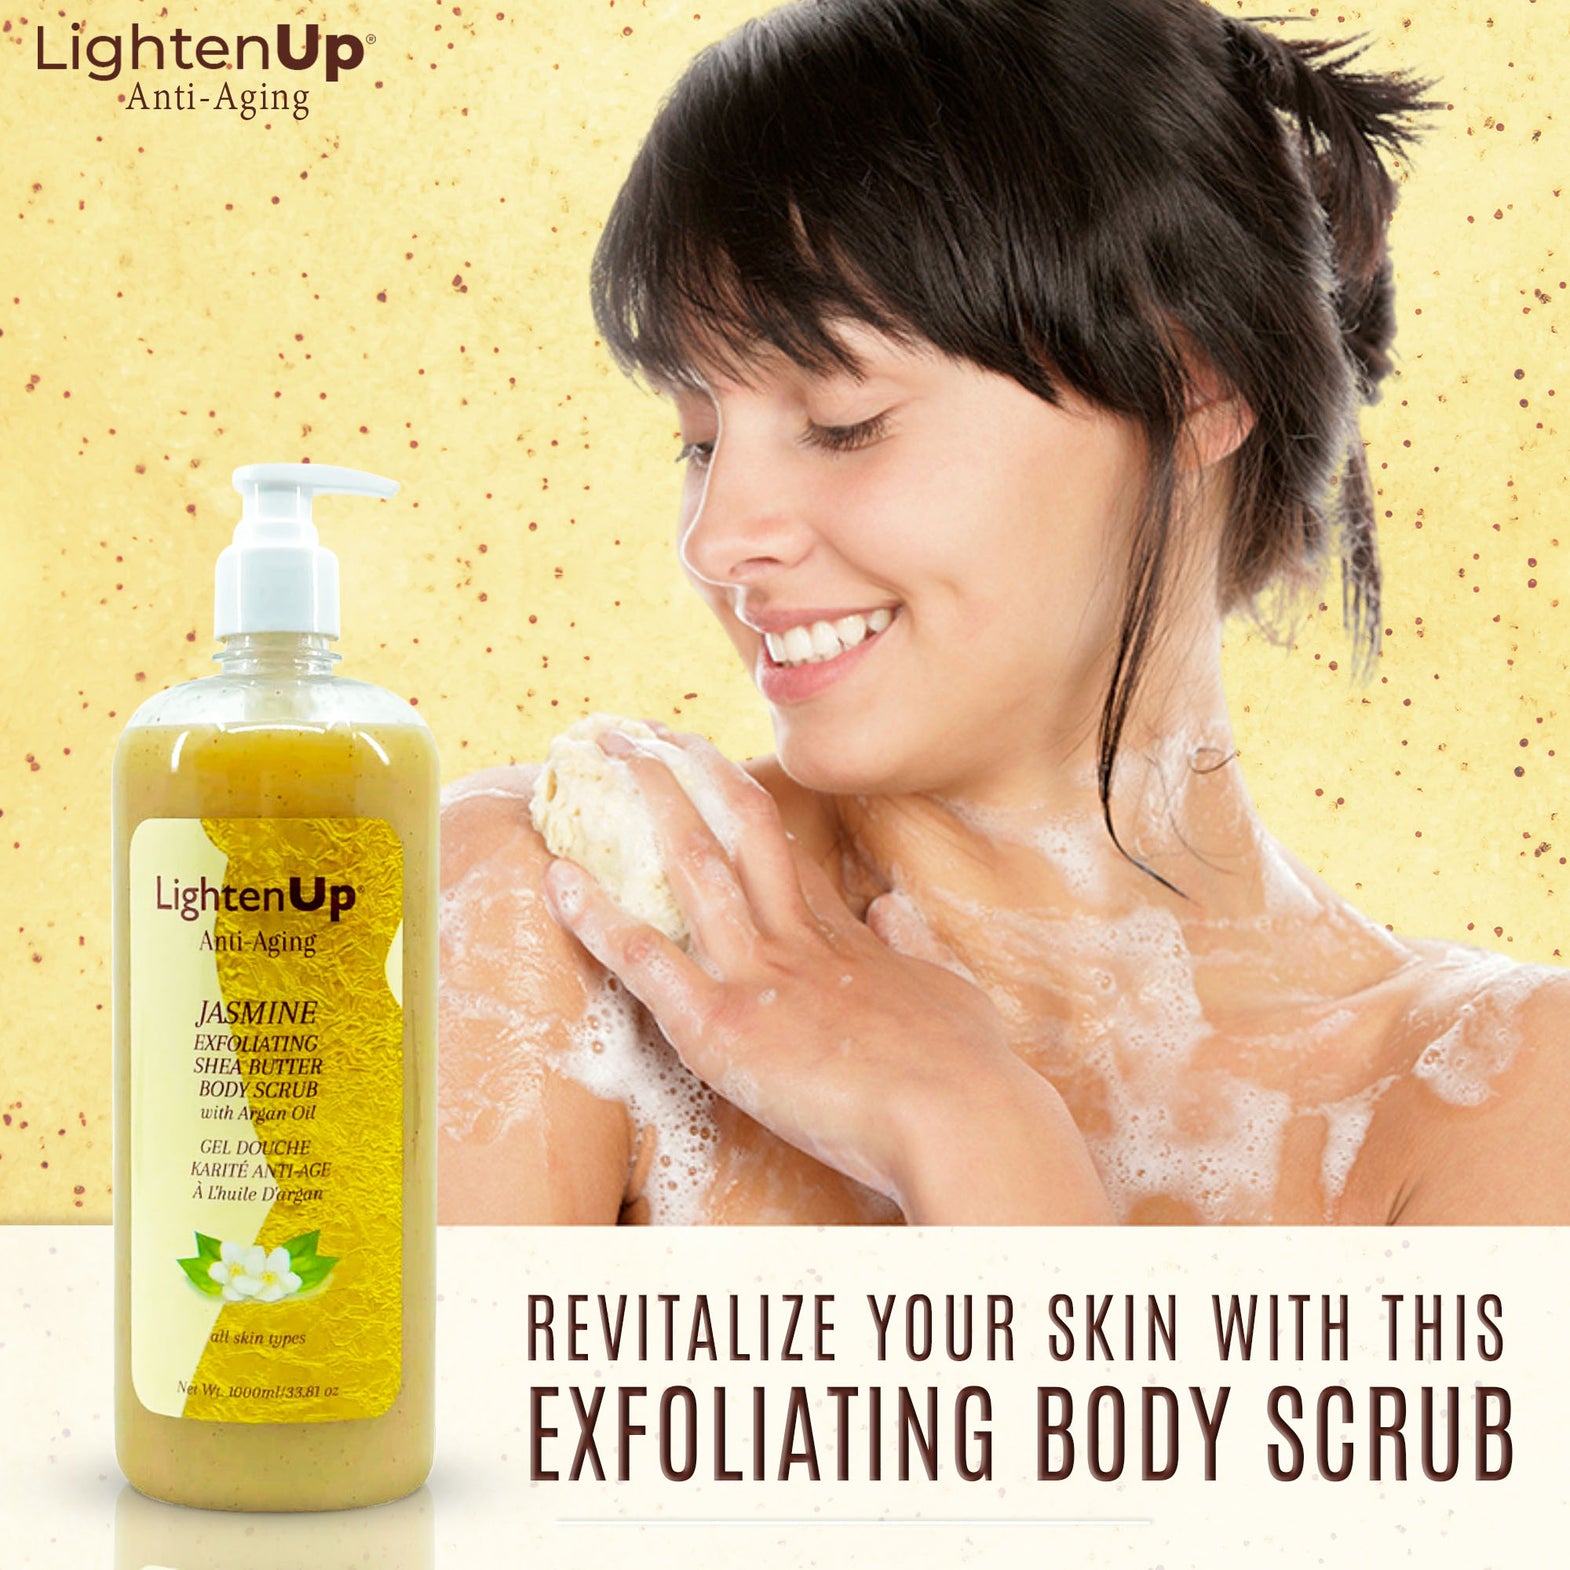 LightenUp Anti-Aging Jasmine Exfoliating Shea Butter Shower Gel with Argan Oil 1000ml